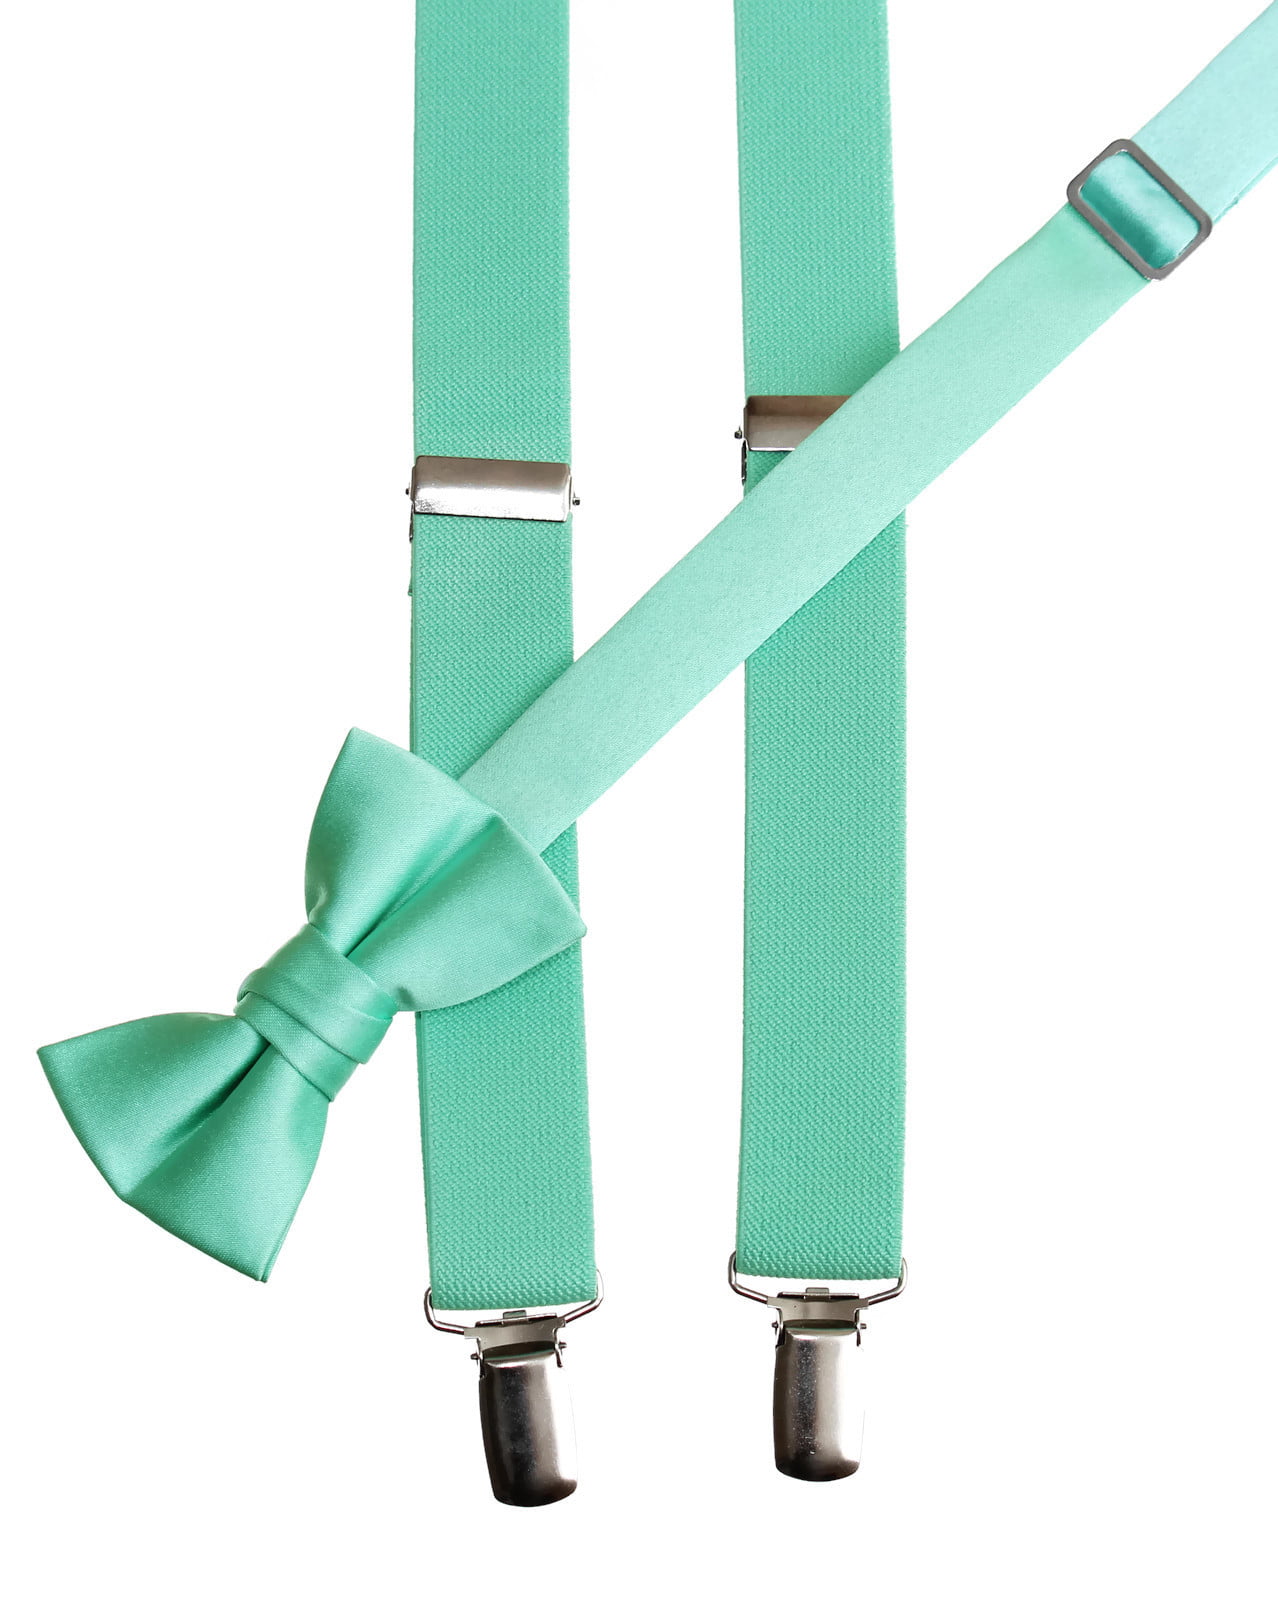 Eyuio Bite Me Custom Unisex Suspender With Bow Tie Set Adjustable Elastic Y-Back Necktie Child Bowtie